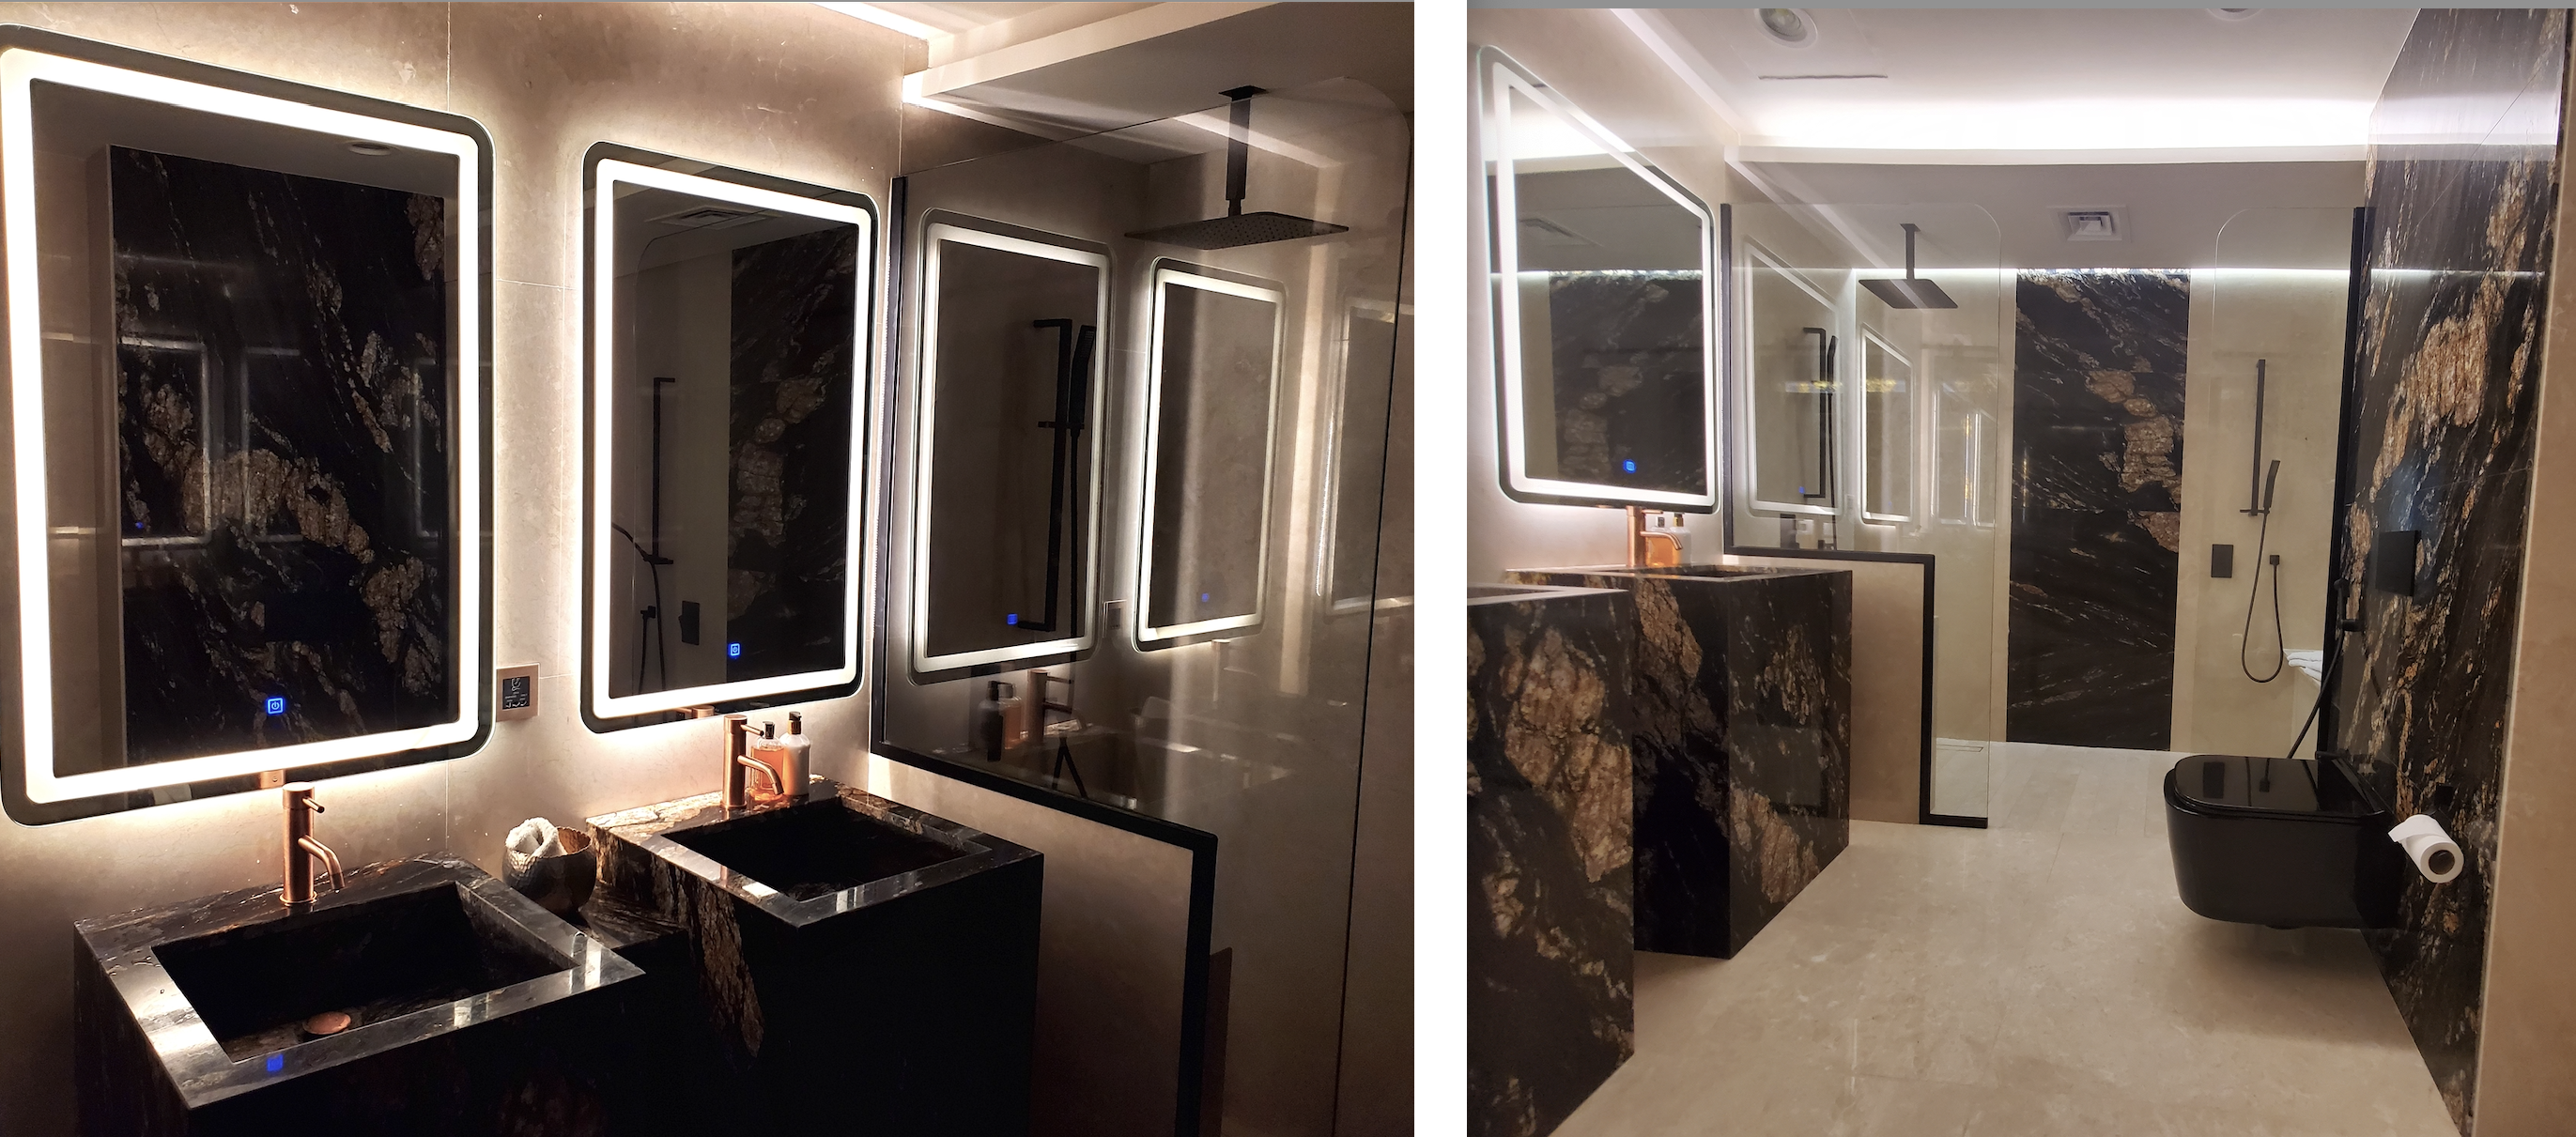 bathroom renovations palm shoreline , master bathroom shoreline renovations, home fitout dubai, dubai interior design, interior designer in dubai